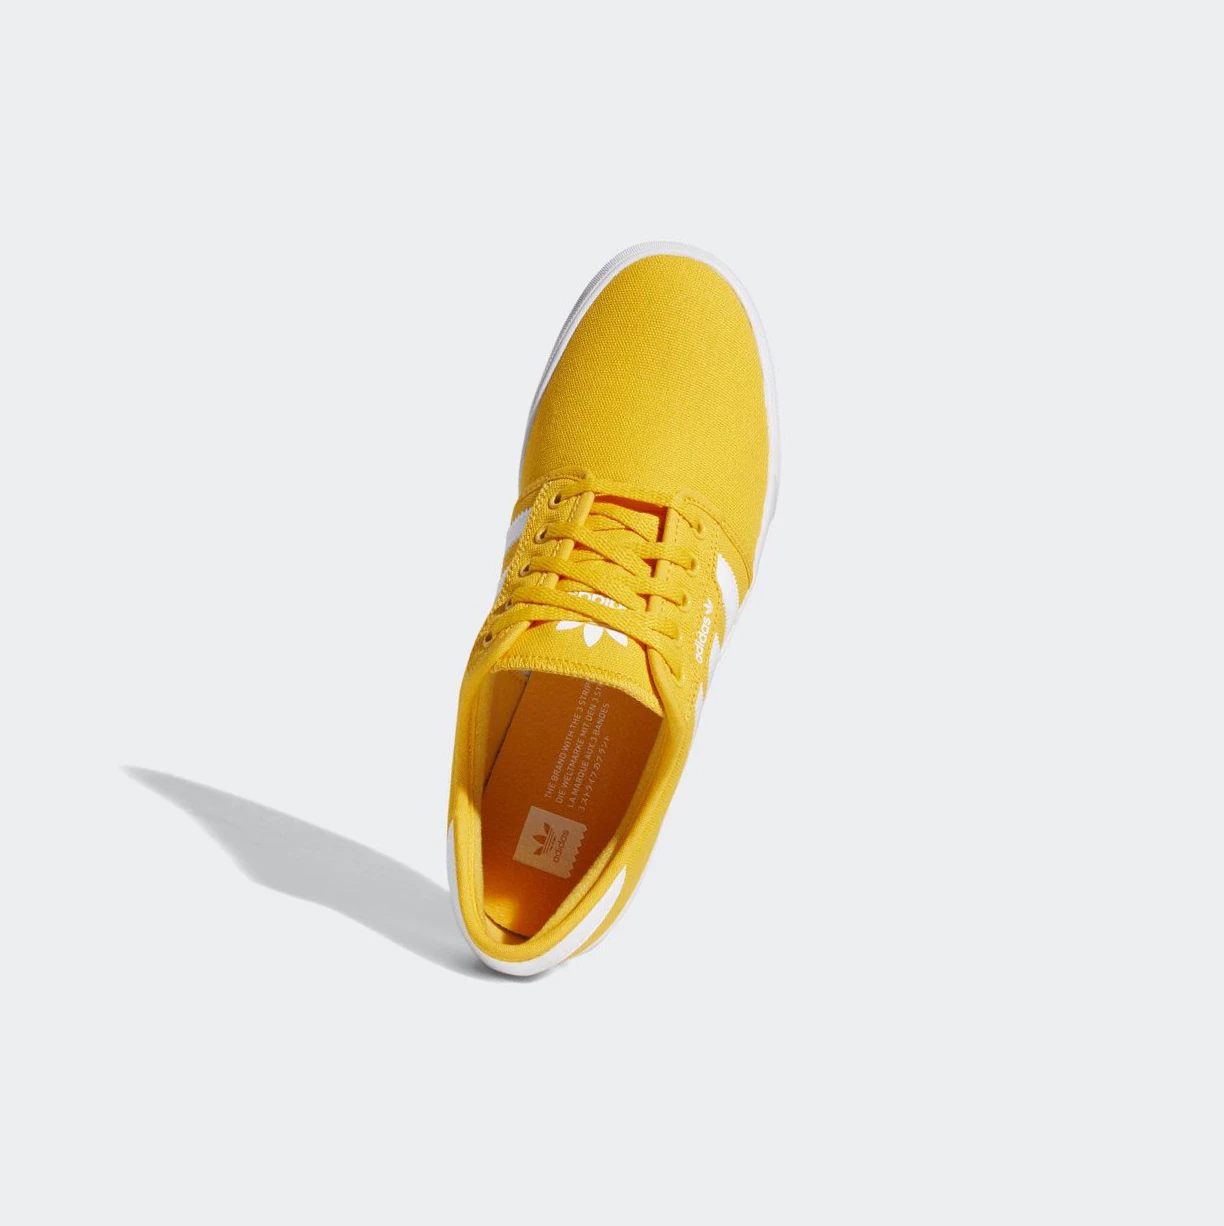 Originálne Topánky Adidas Seeley Panske Žlté | 486SKPDJGSR